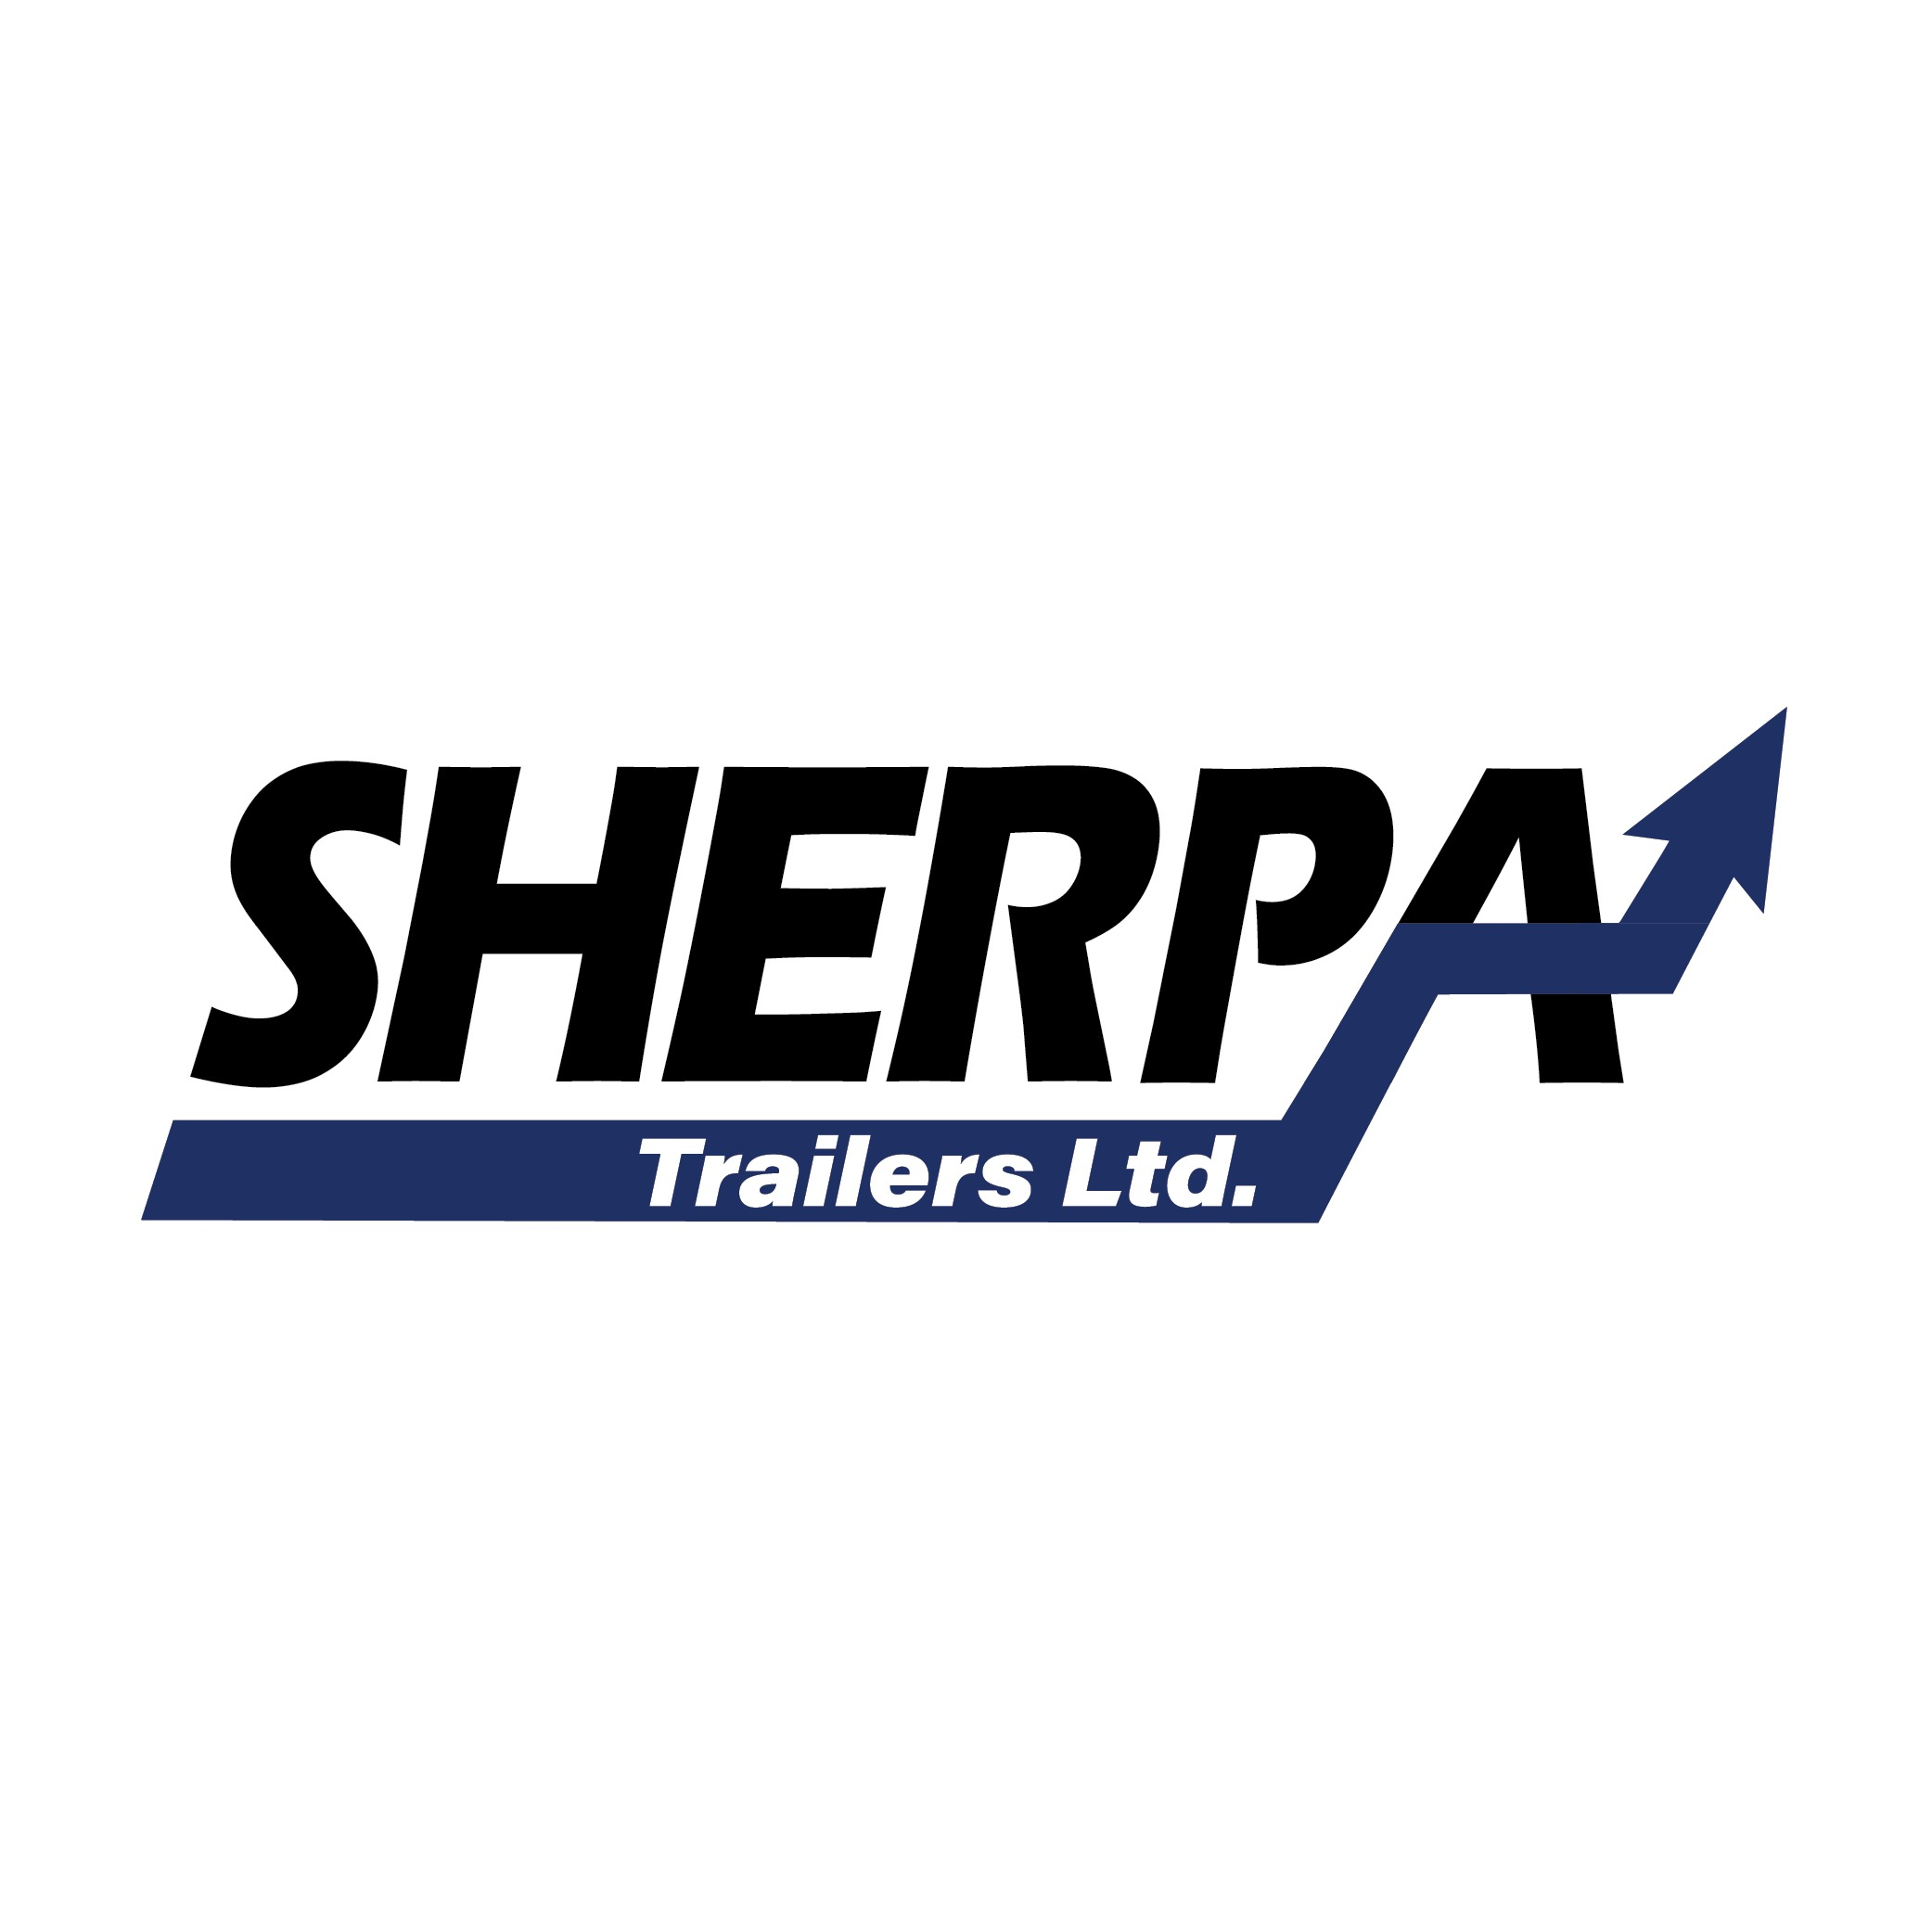 Sherpa Trailers Ltd